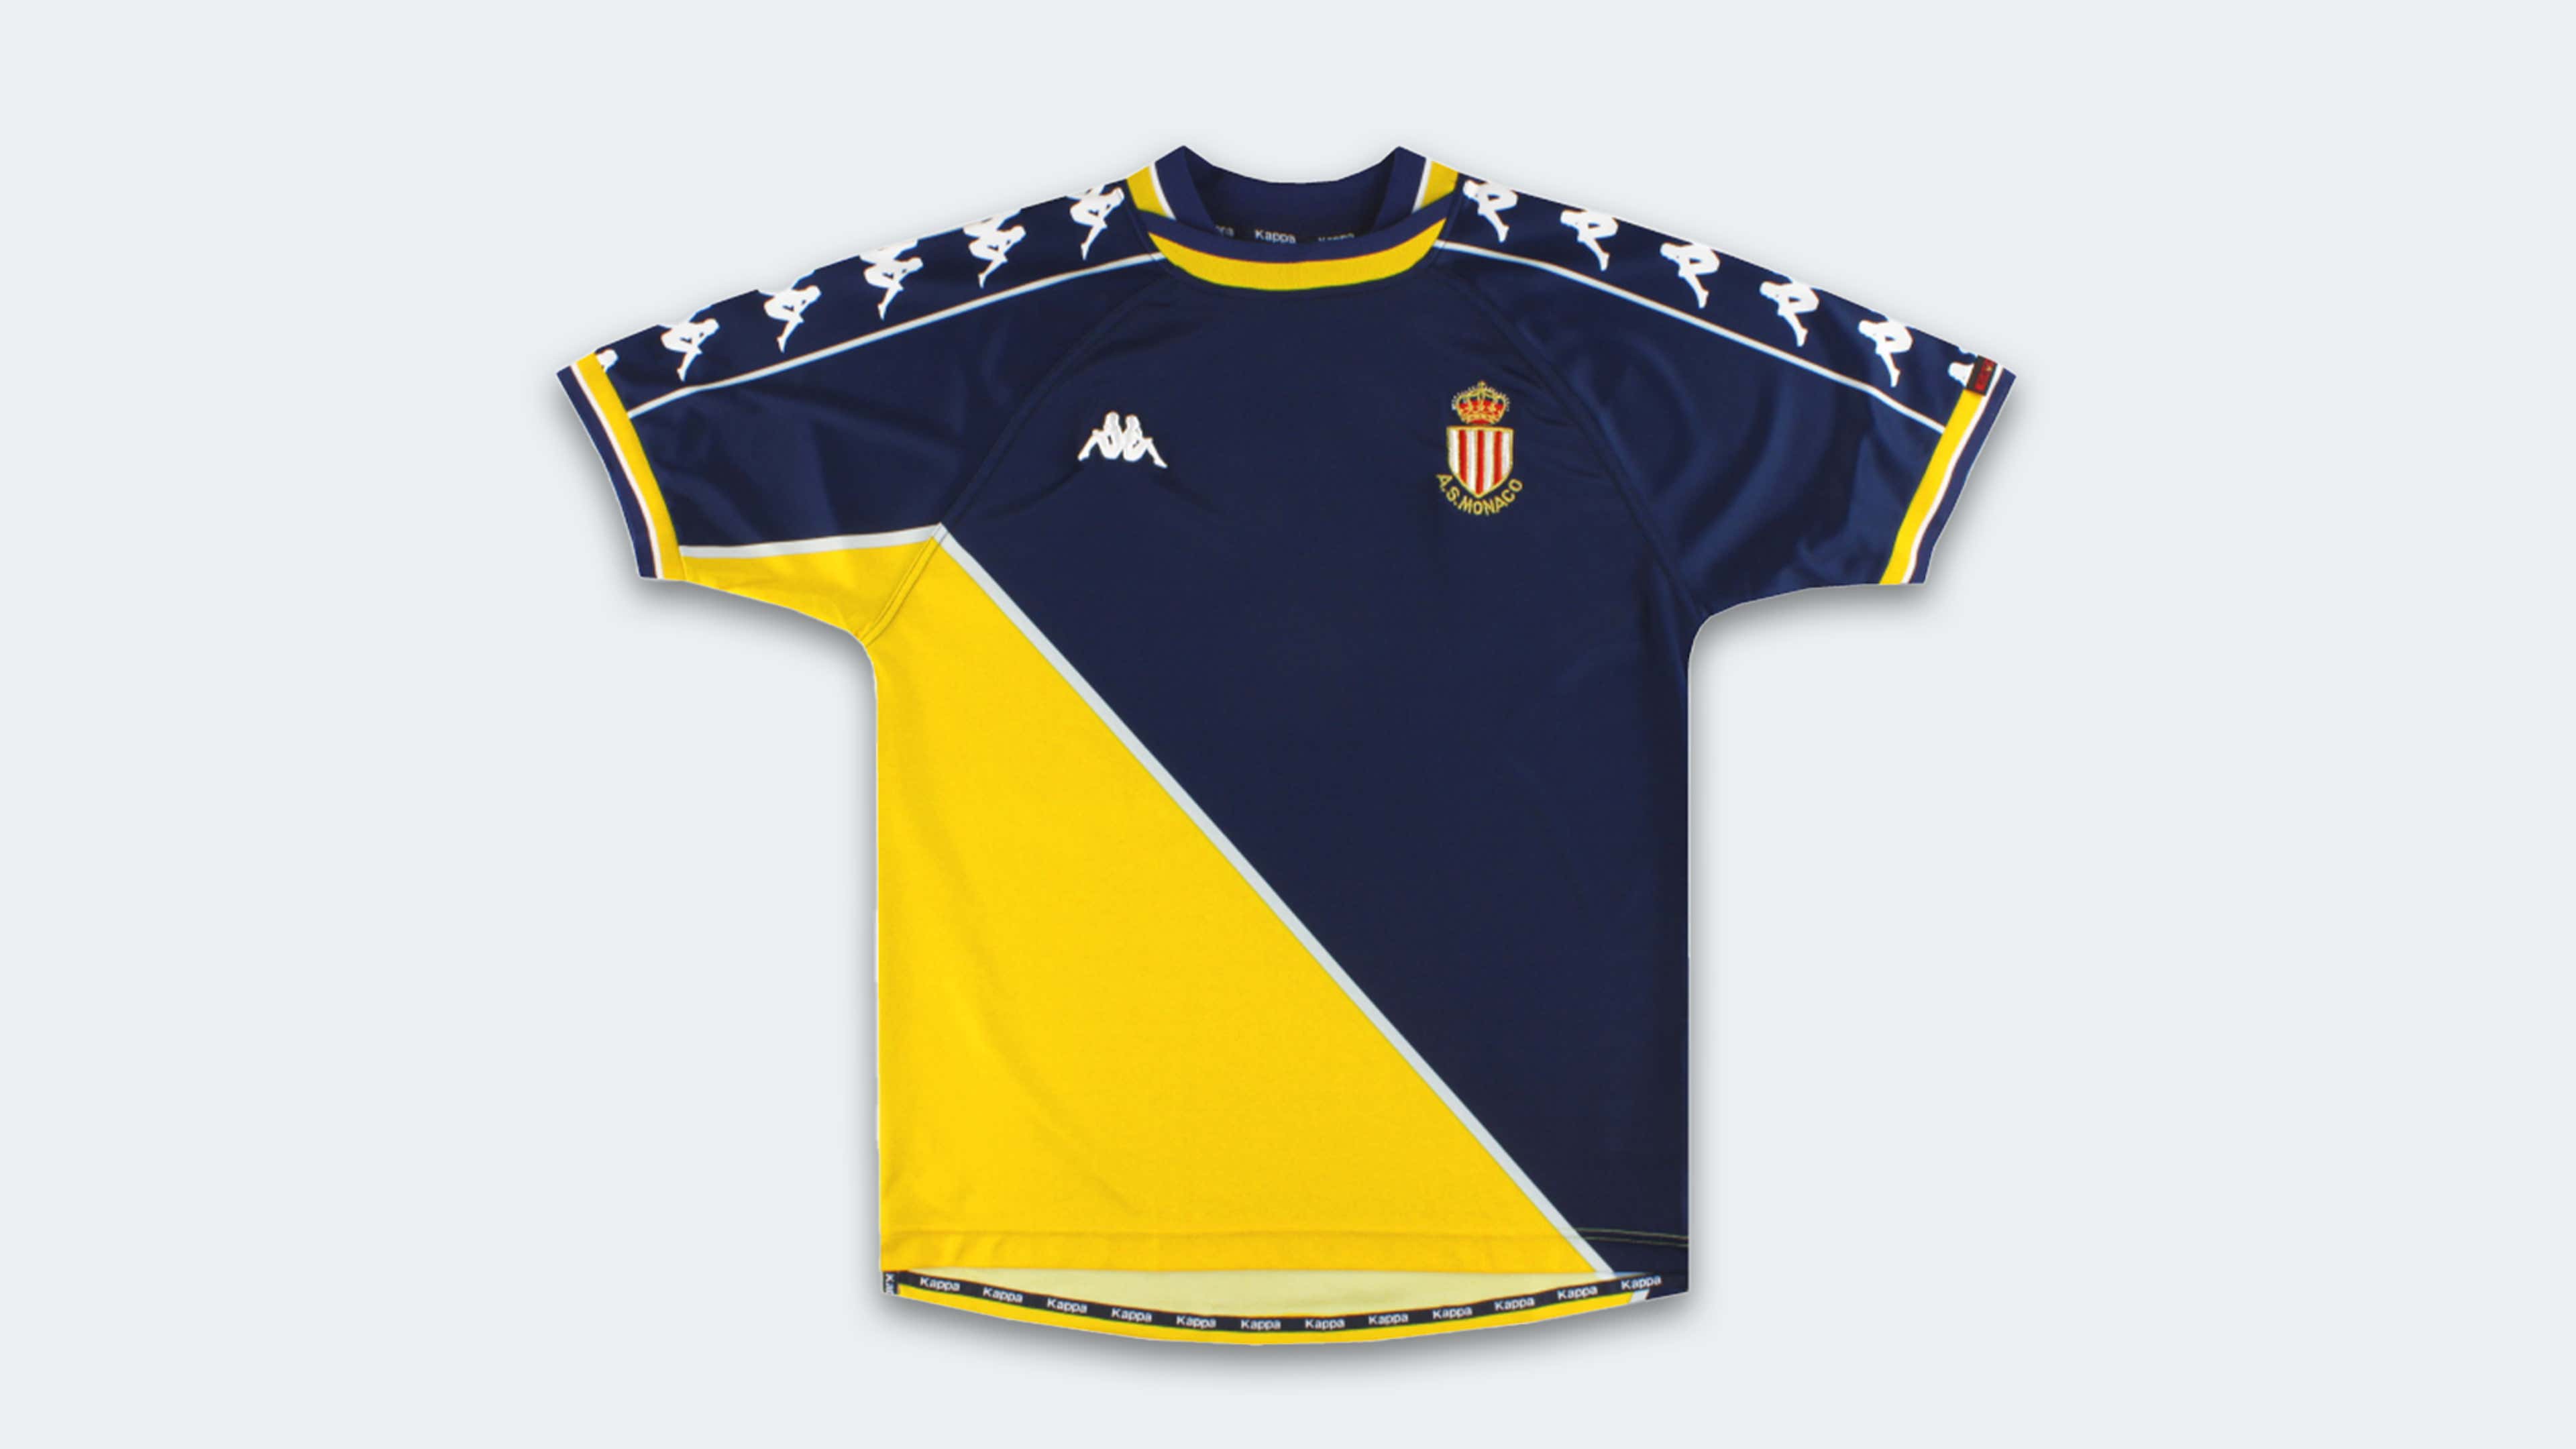 Paris Saint Germain 2007/2008 Nike football kits maillot - Football Shirt  Culture - Latest Football Kit News and More